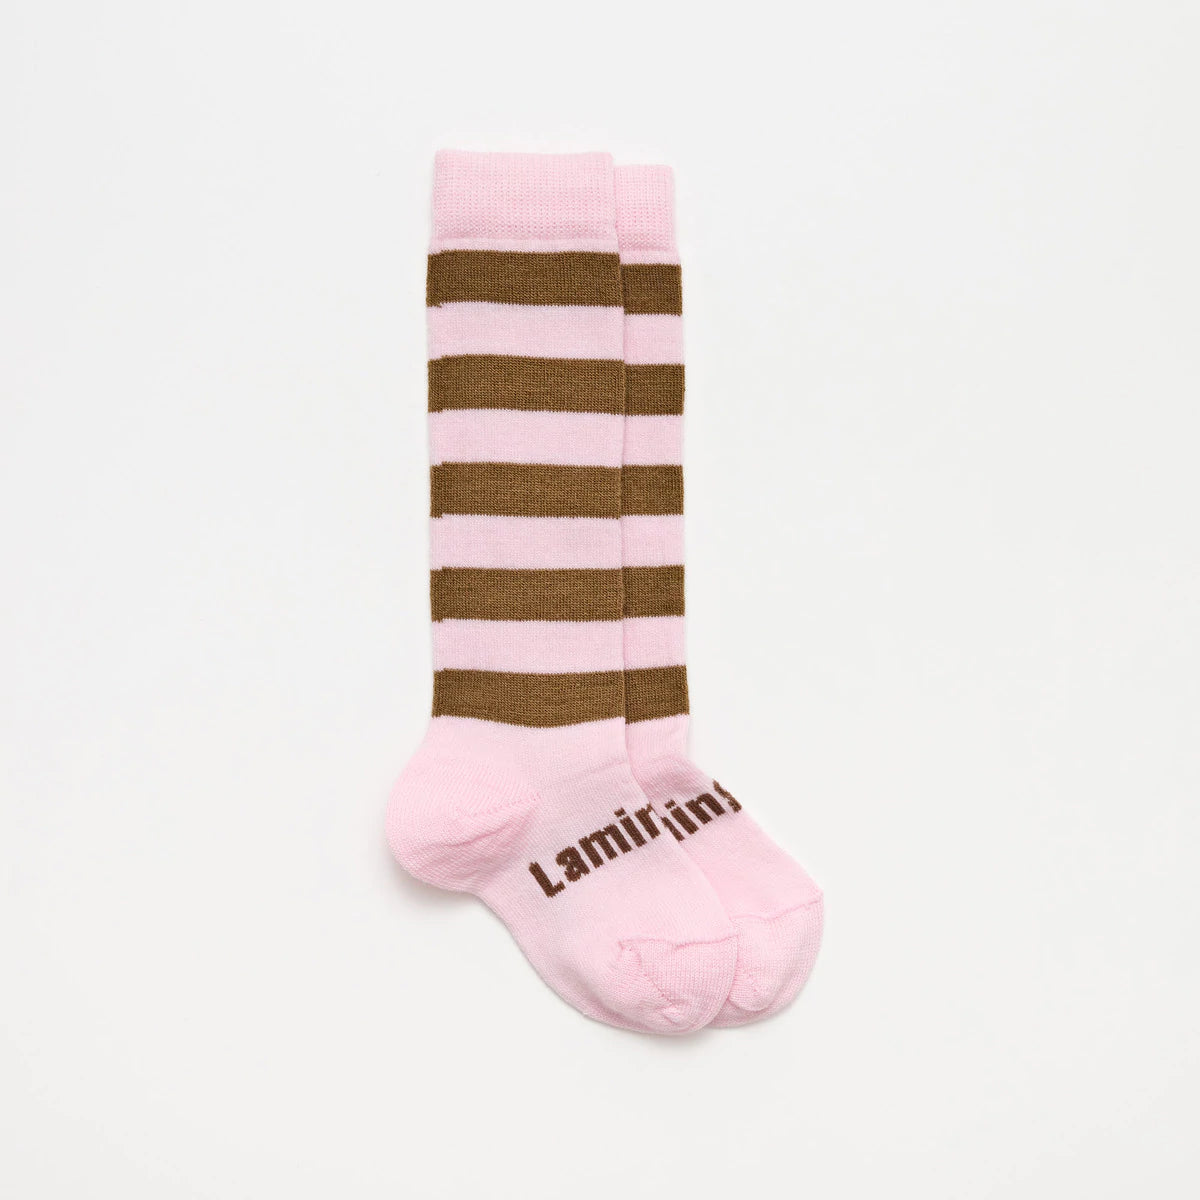 Lamington | Merino Socks - Maeve